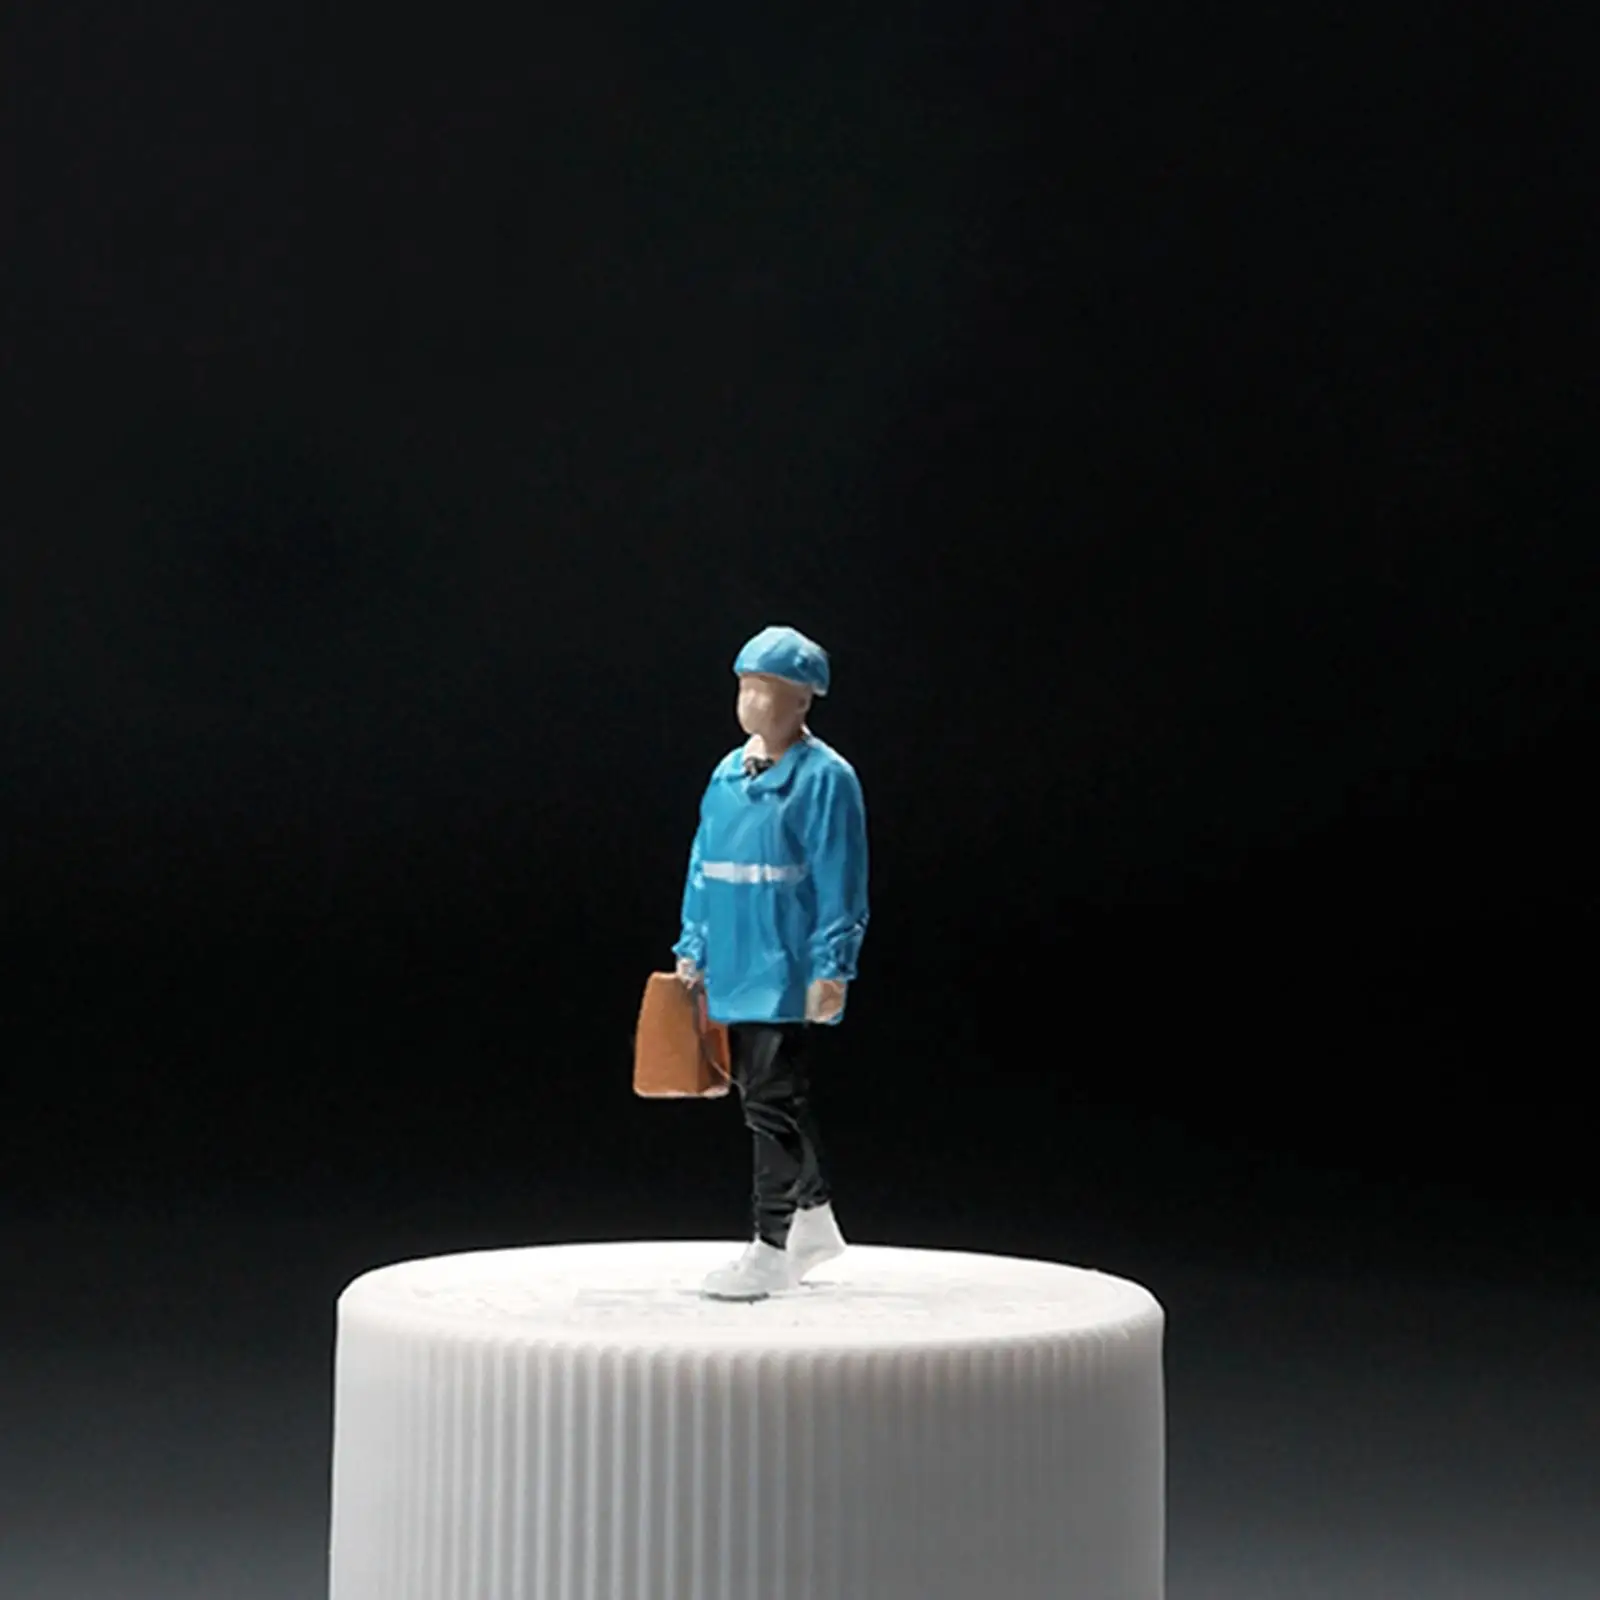 1/64 People Figures Miniature Deliveryman Figurines for Scenery Landscape